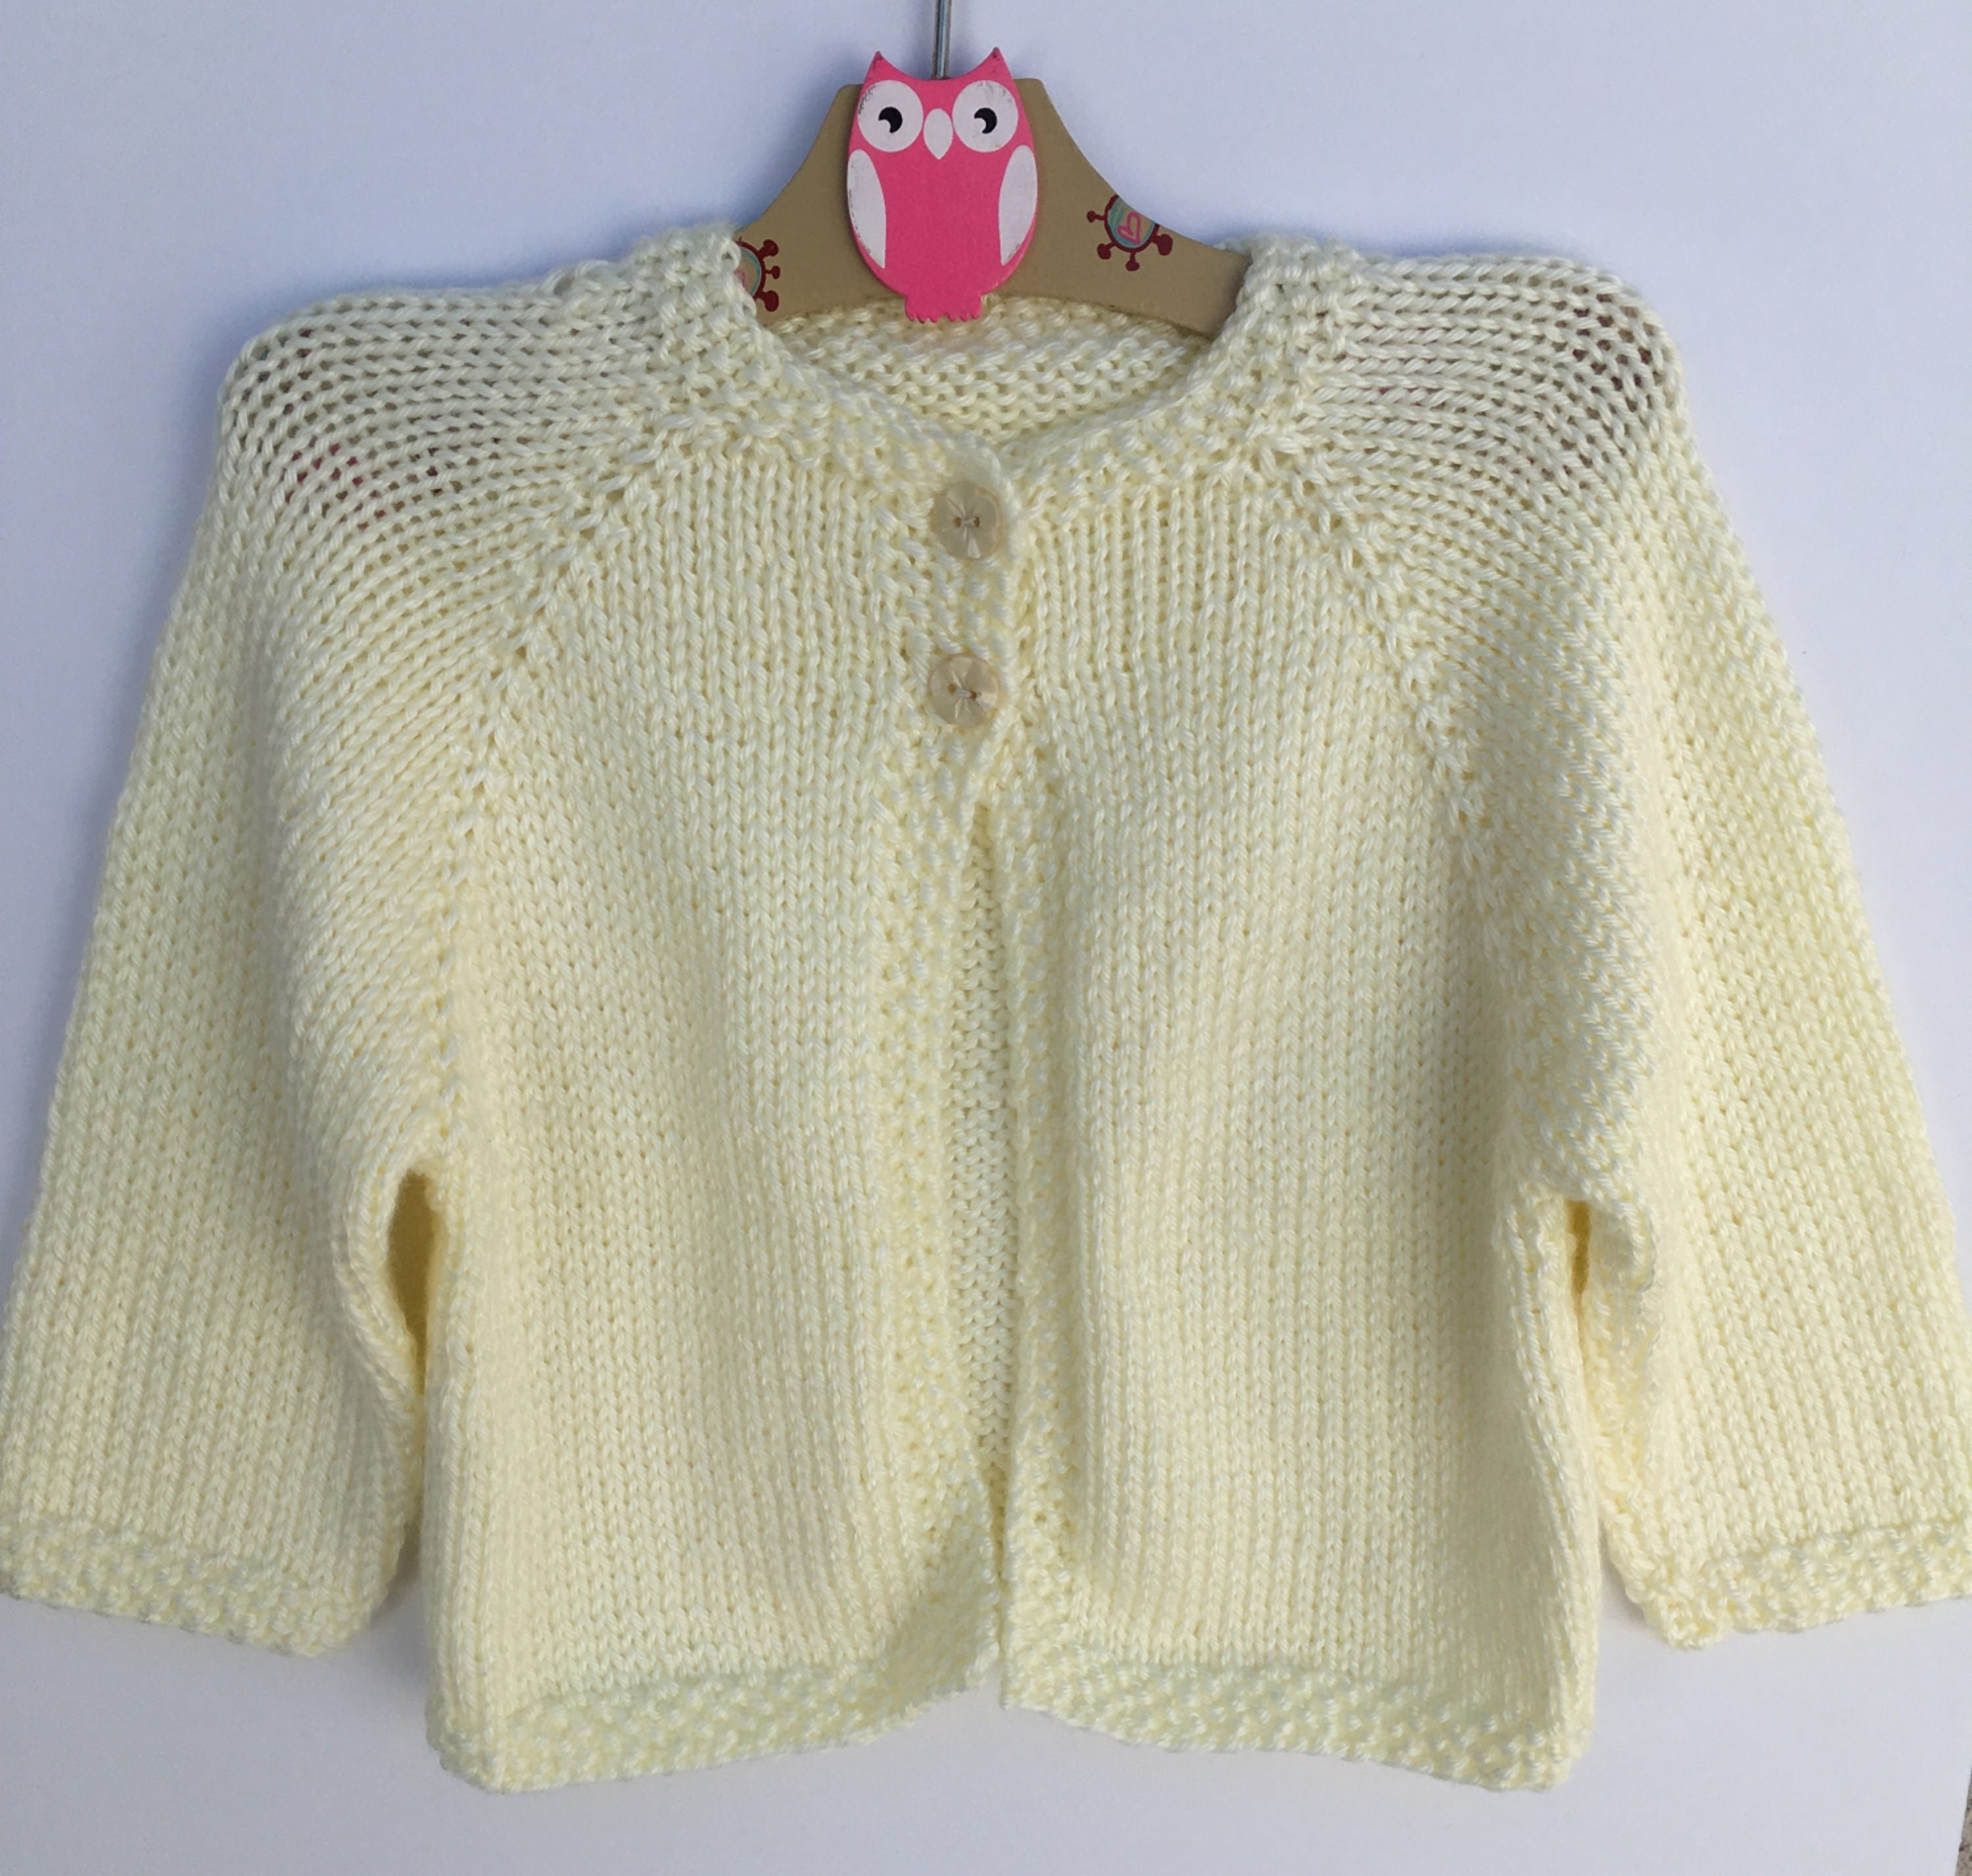 SALE: Children's sweater. Soft pale yellow cardigan.